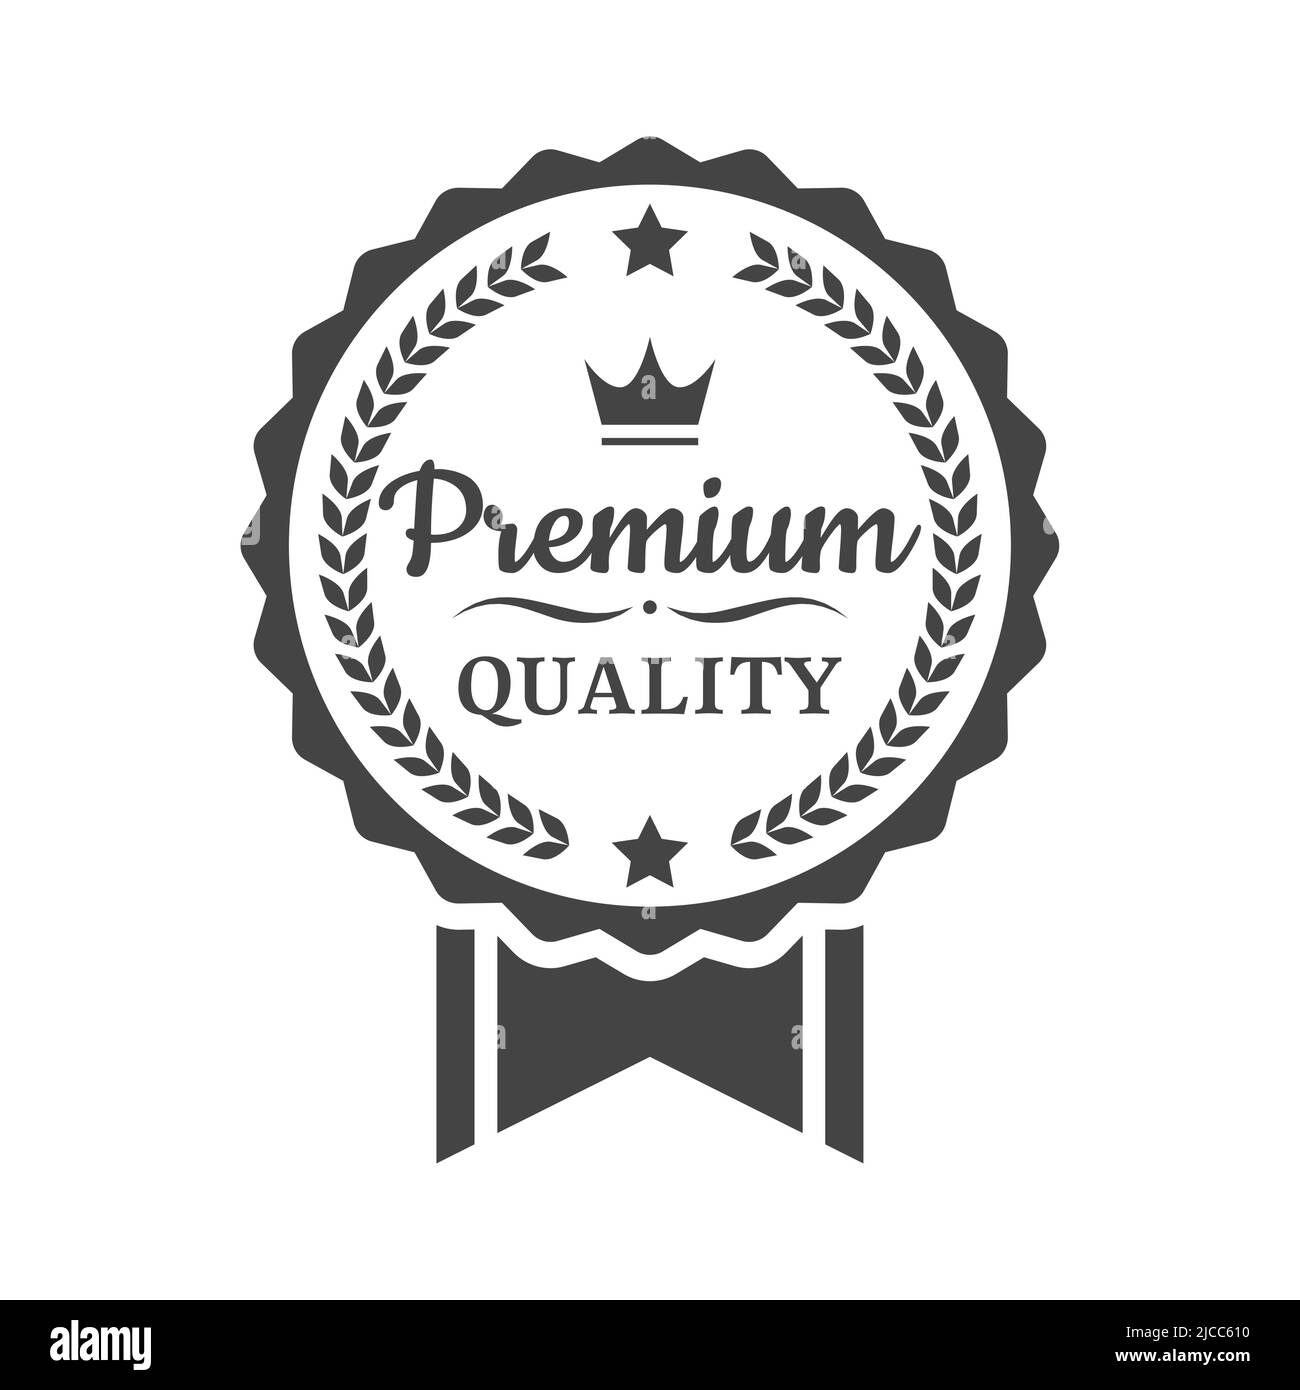 Premium Vector  Limited edition ribbon label vector stock illustration